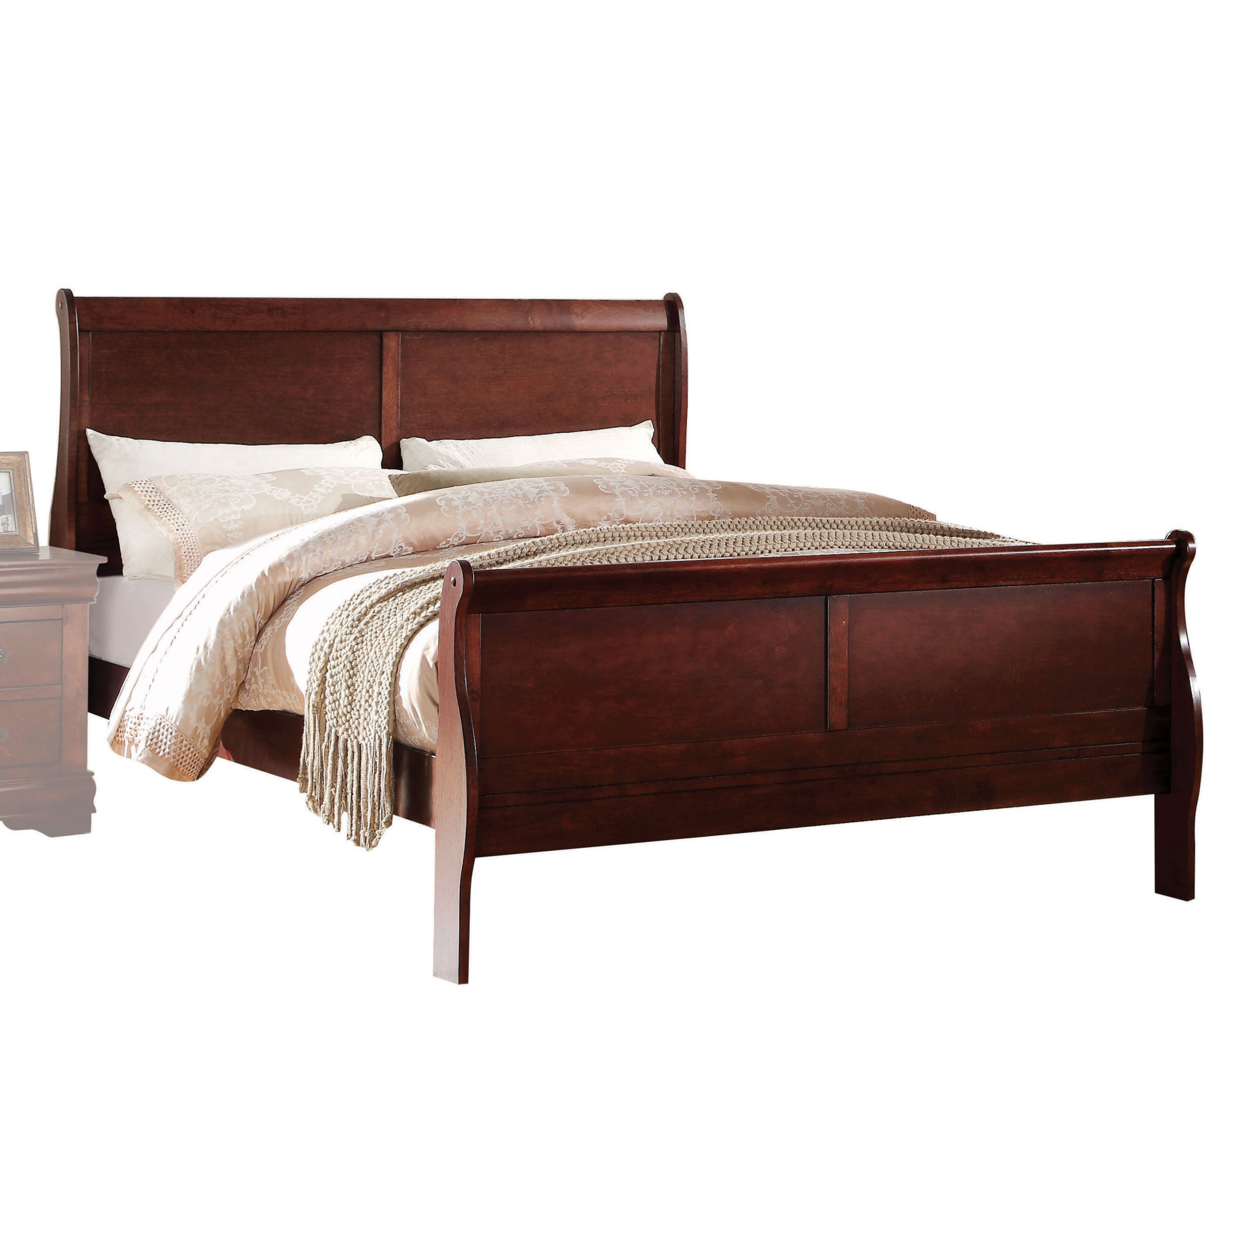 Transitional Panel Design Sleigh Eastern King Size Bed, Cherry Brown- Saltoro Sherpi